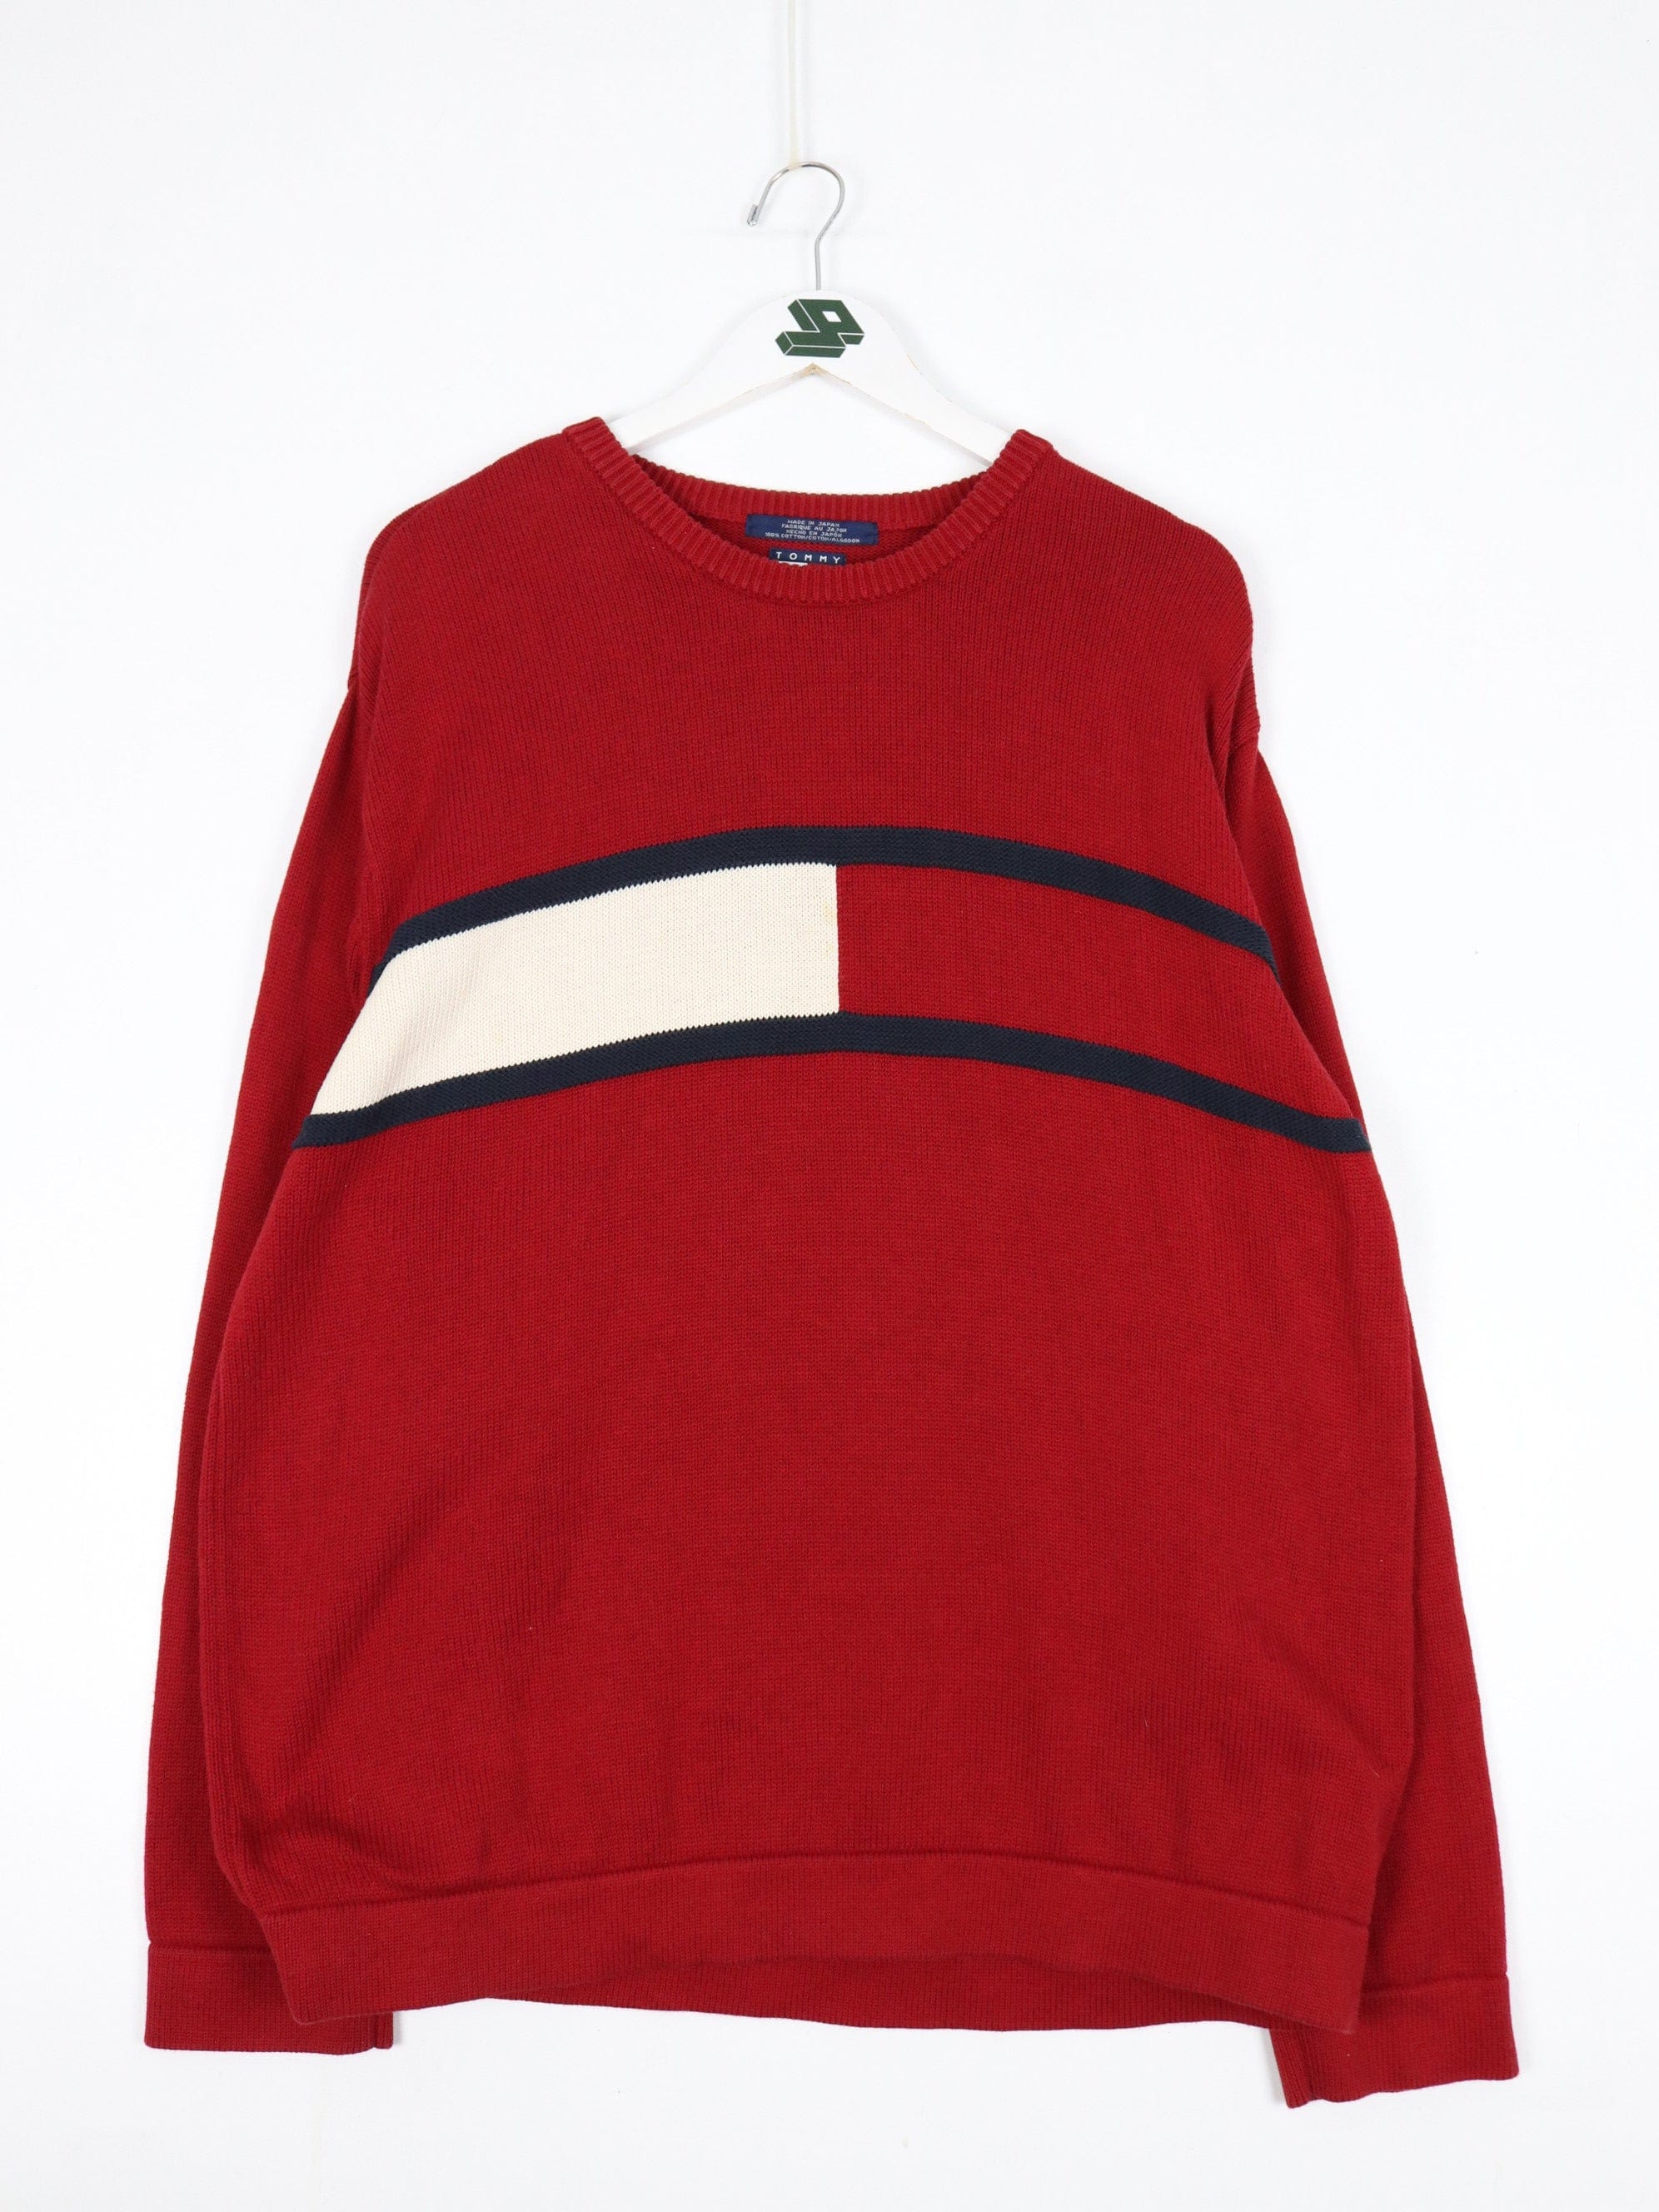 Vintage Tommy Hilfiger Sweater Mens XL Red Knit Flag Sweatshirt